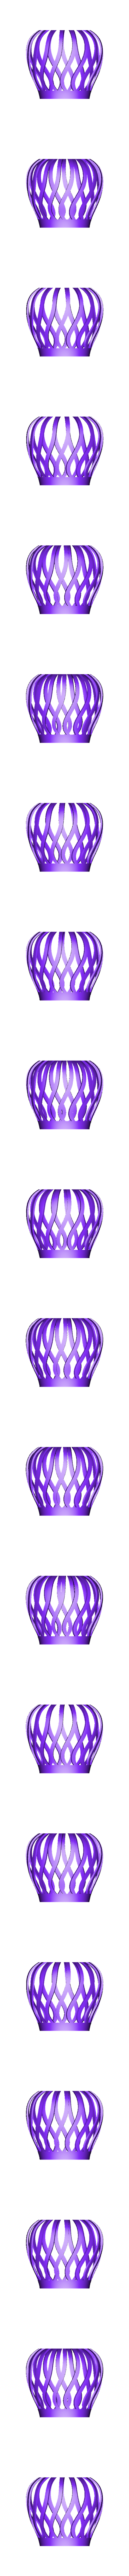 DF-Vs_X_Y__A.stl Download free STL file Dual Extrusion Vase # 4 • Design to 3D print, David_Mussaffi